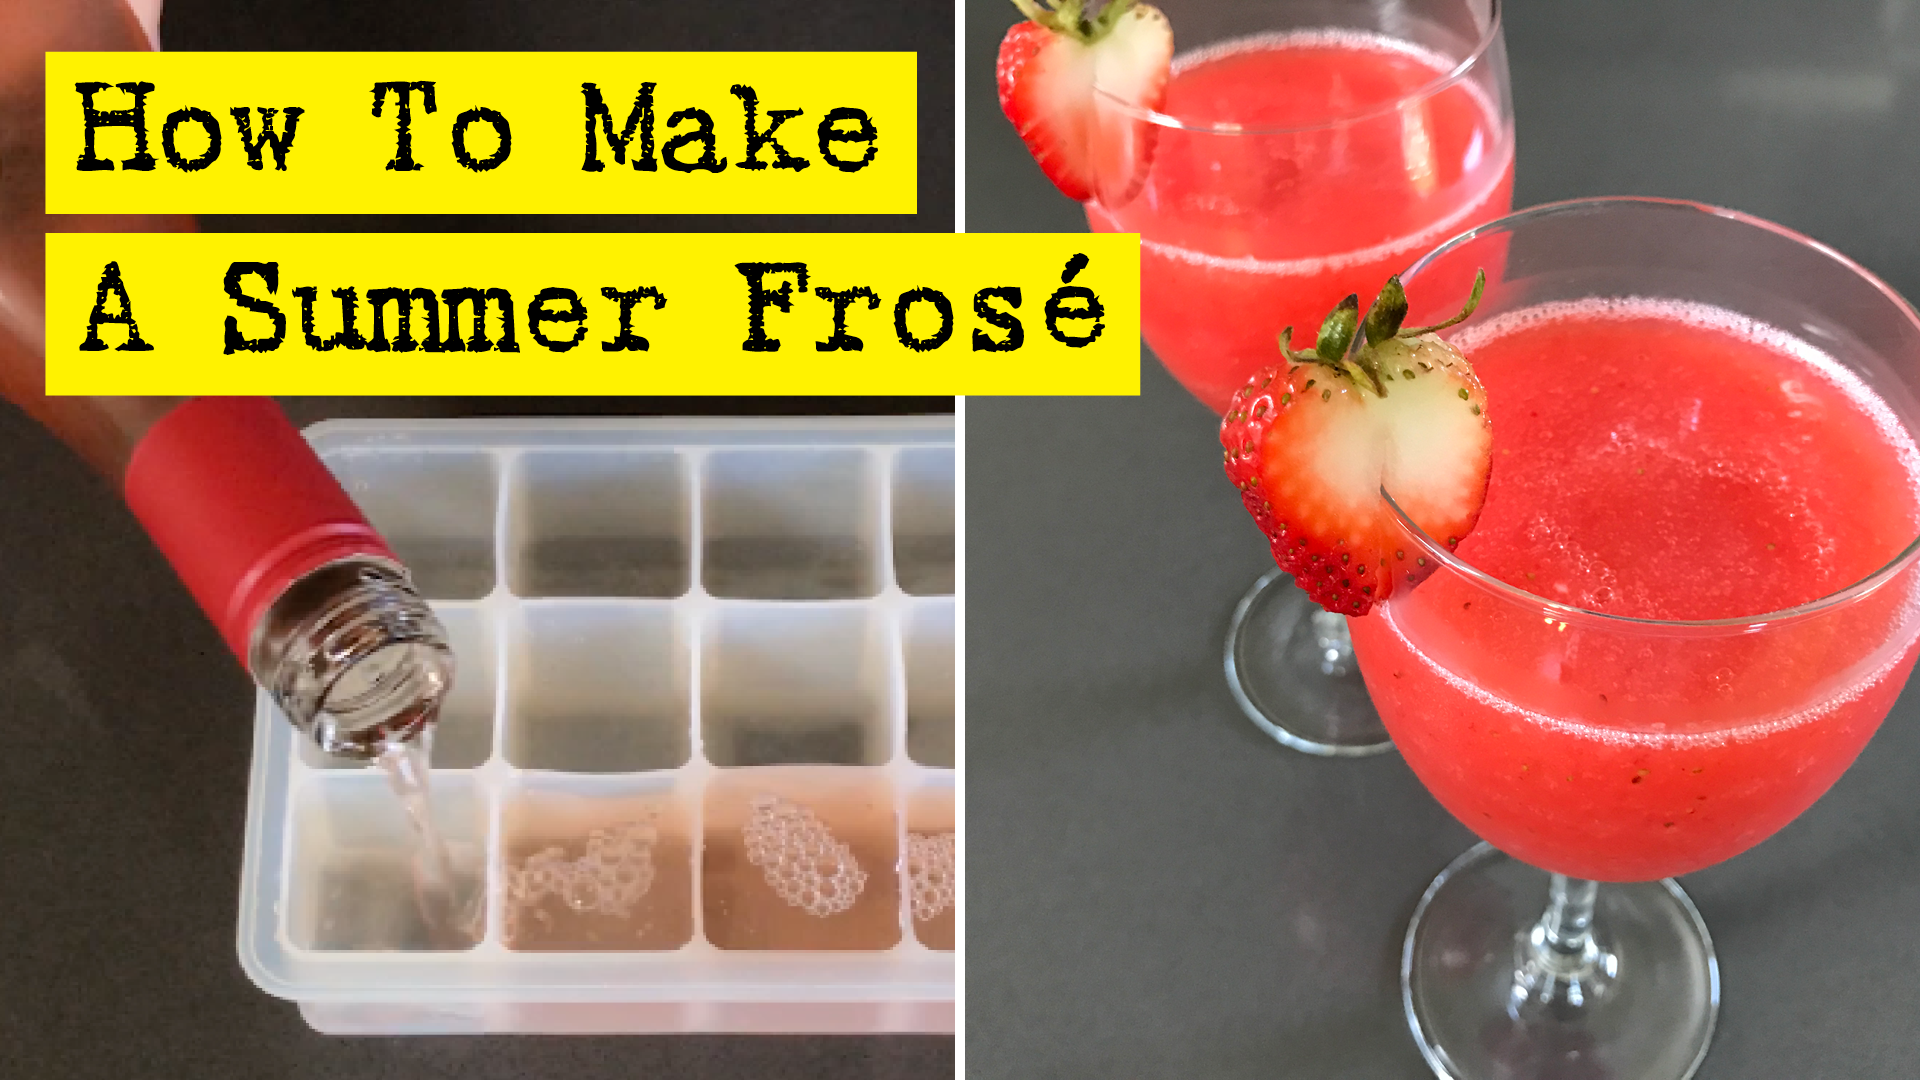 How To Make A Summer Frosé by DIY Presto!